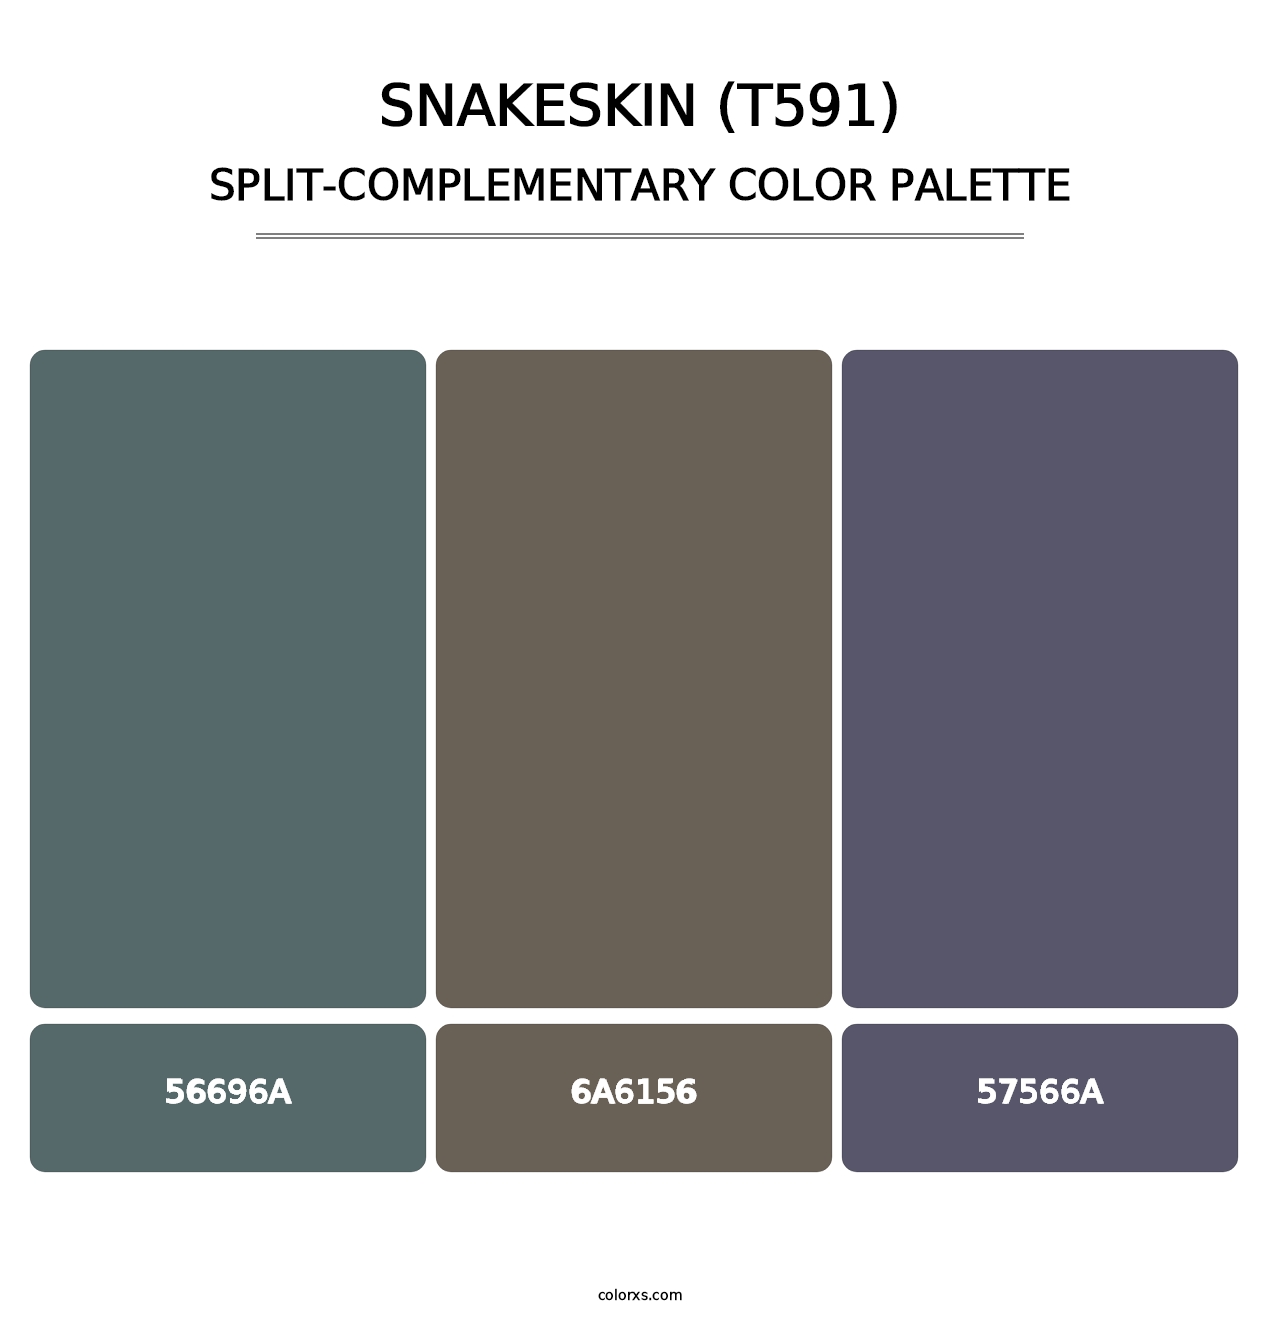 Snakeskin (T591) - Split-Complementary Color Palette